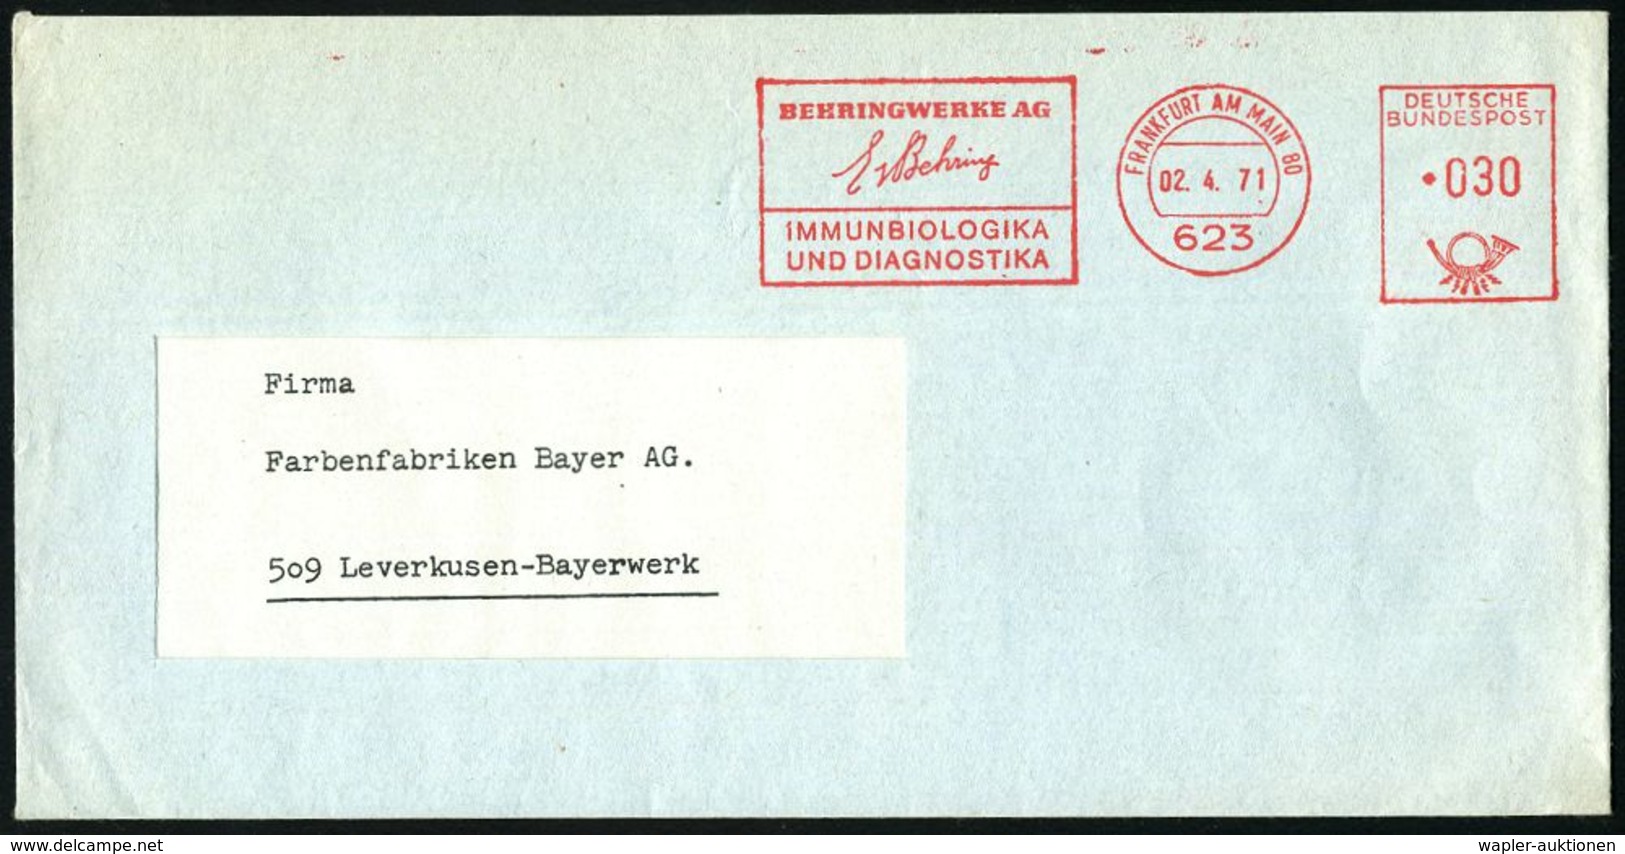 623 FRANKFURT AM MAIN 80/ BEHRINGWERKE AG/ E V Behring.. 1971 (2.4.) AFS = Schriftzug "E V Behring" = Nobepreis 1901 ,rs - Prix Nobel